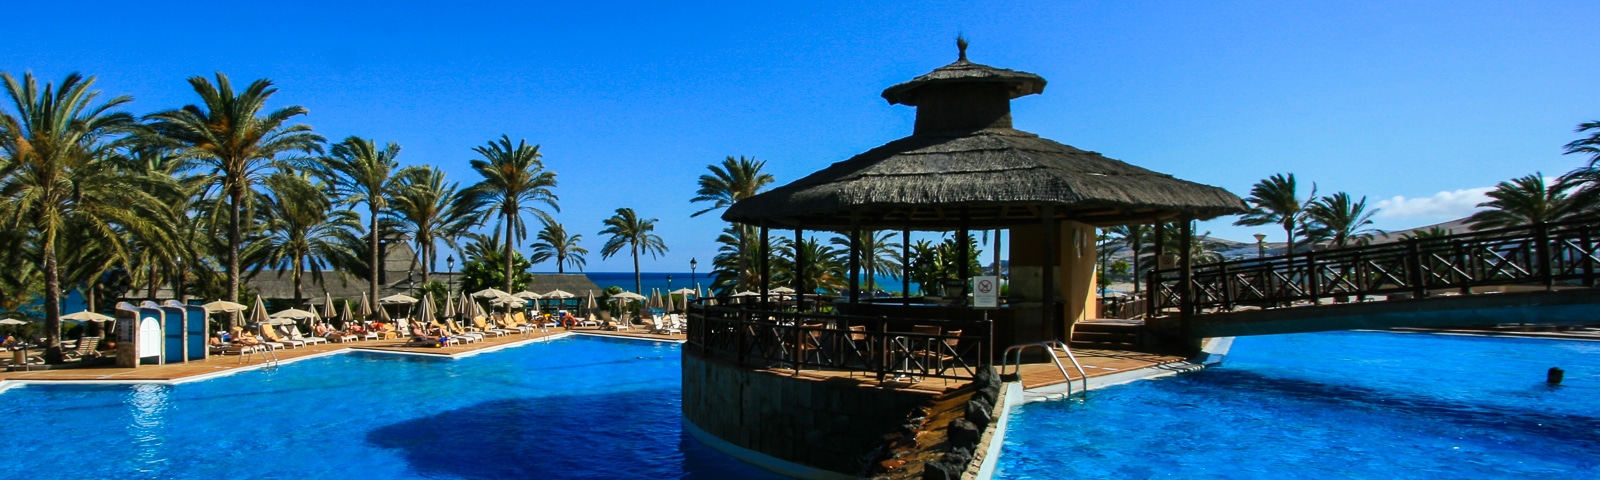 Beschreibung Hotel SBH Costa Calma Beach Resort